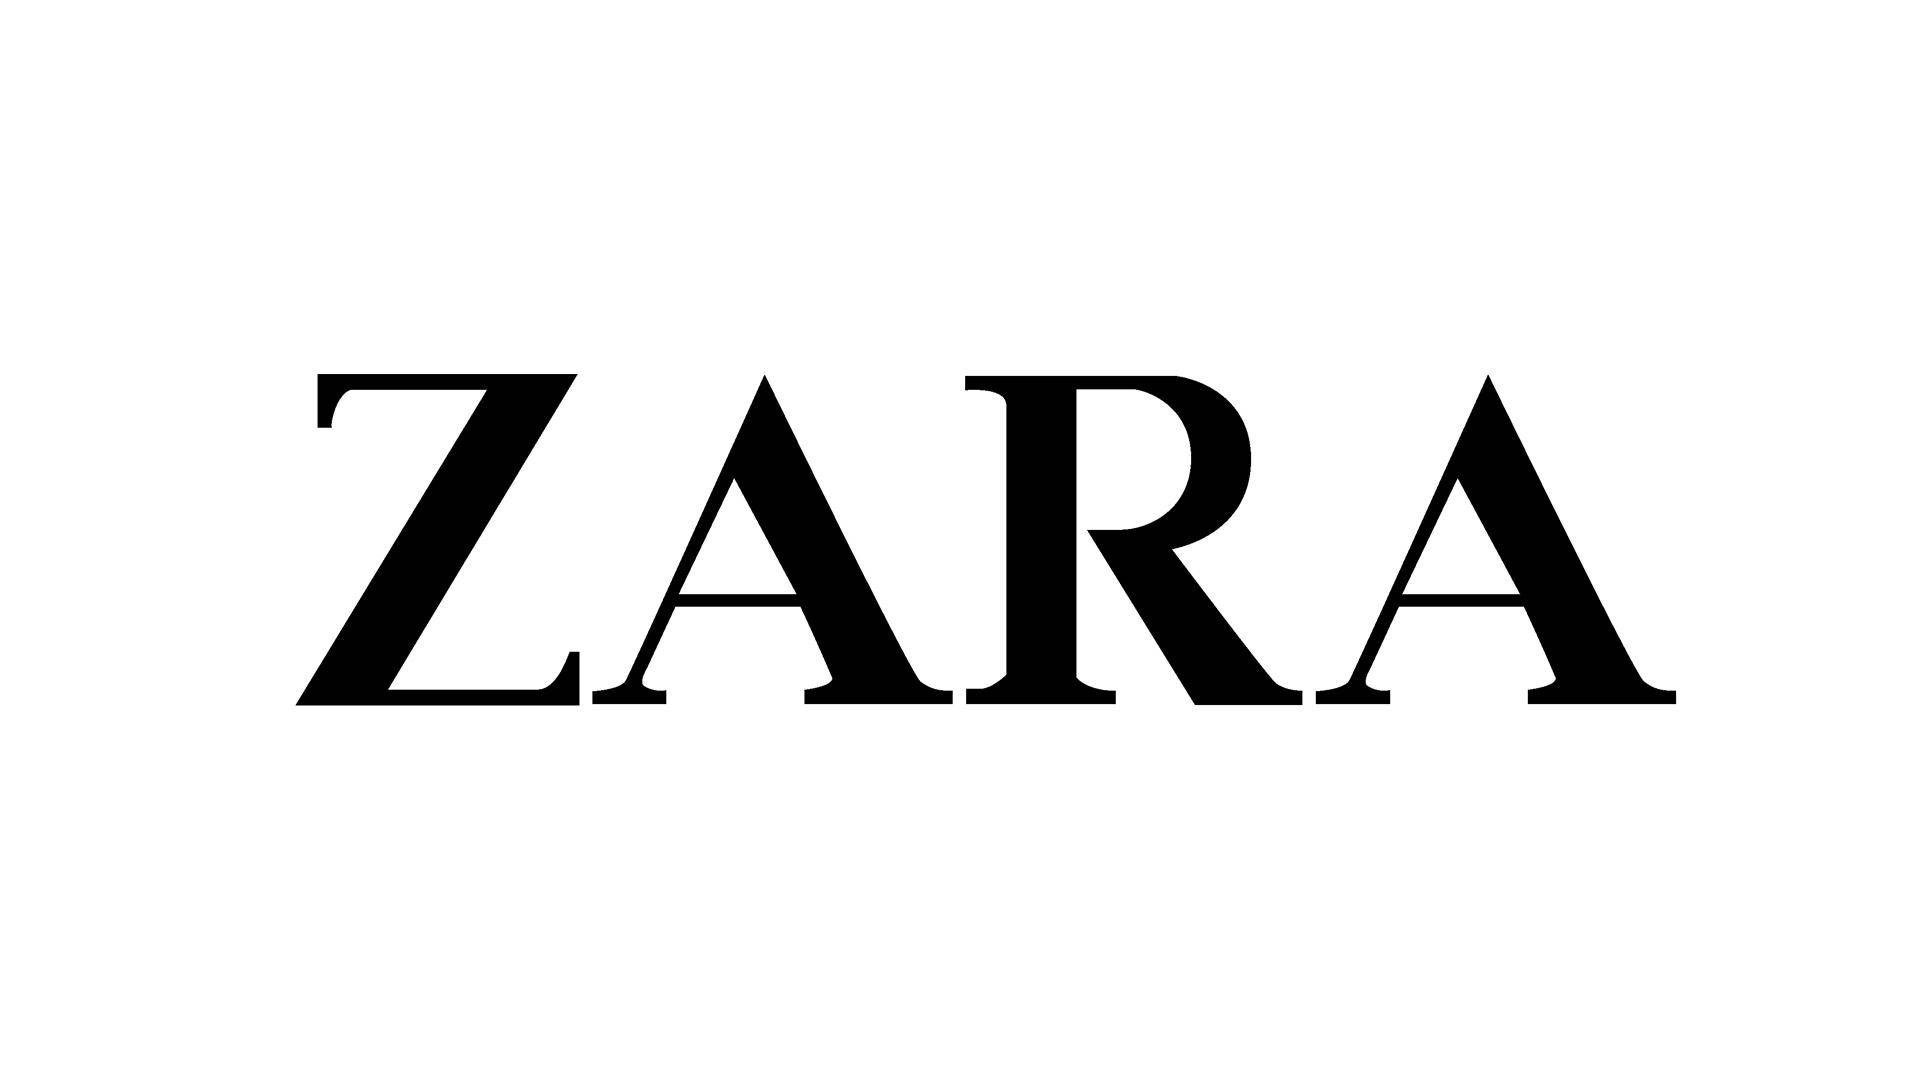 Zara Fashion Brand Logo Wallpaper